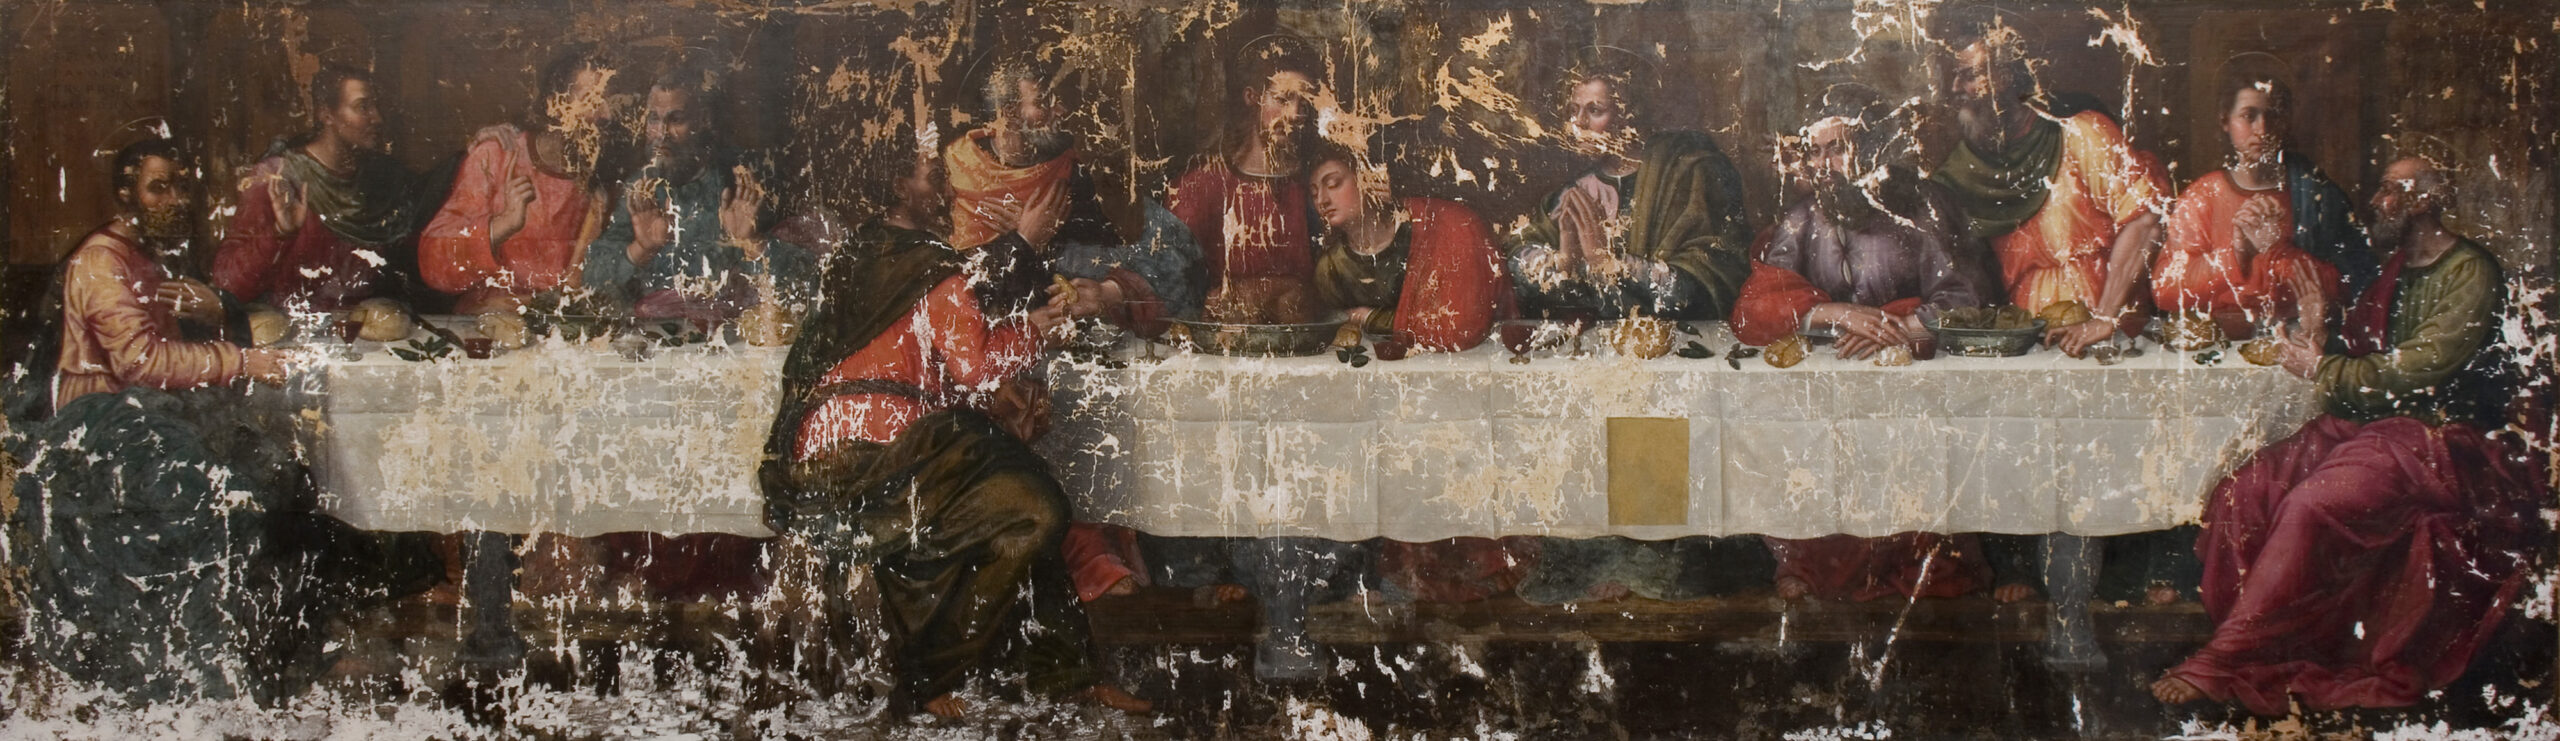 Plautilla Nelli, The Last Supper (before 2019 restoration), c. 1568, oil on canvas, 200 x 700 cm (Santa Maria Novella Museum, Florence)